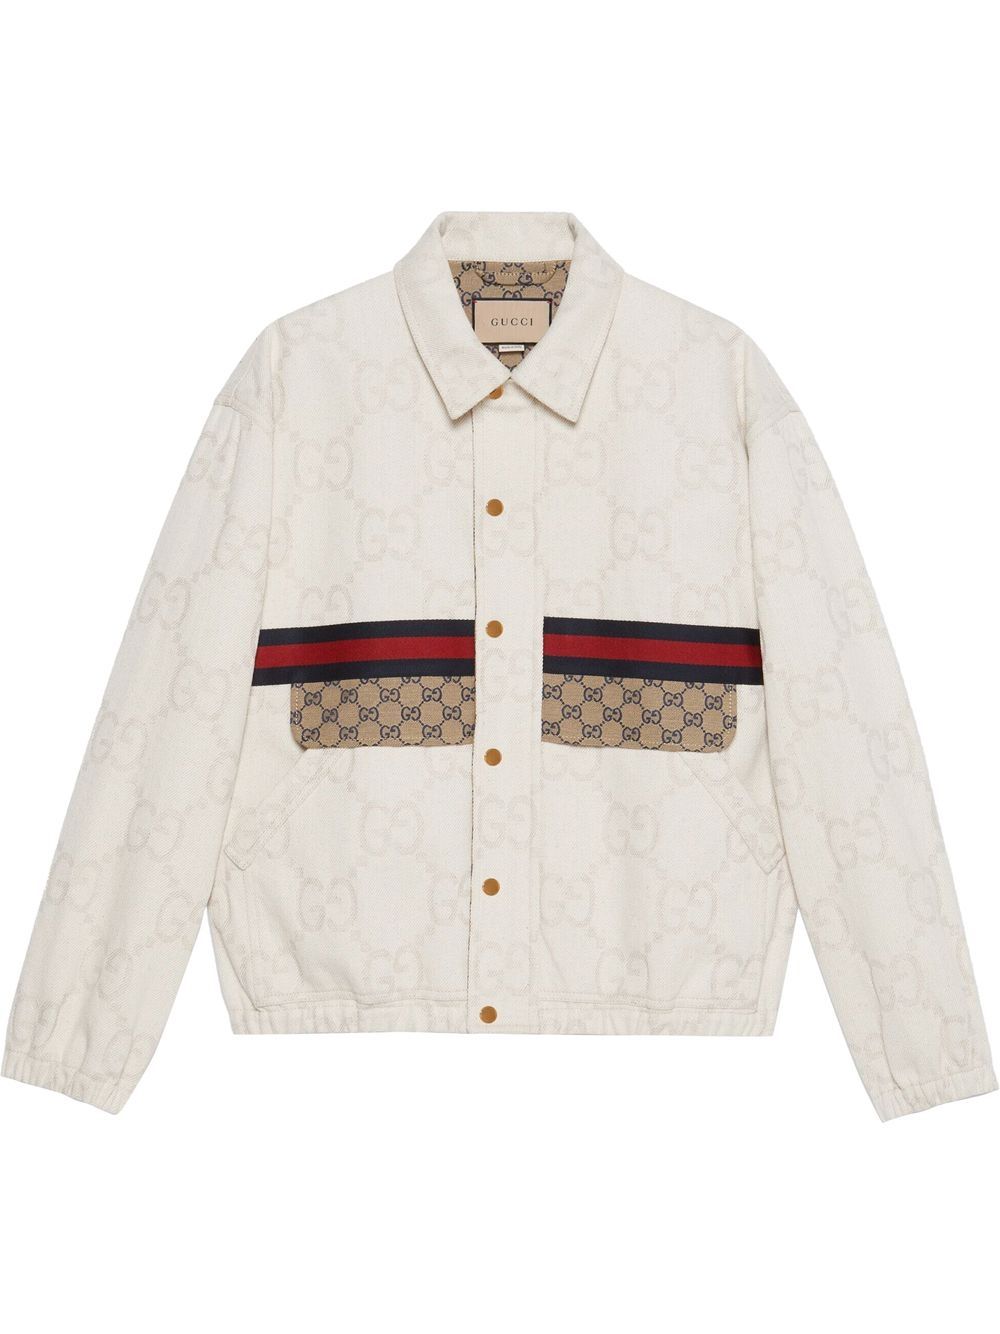 Gucci Gg-print Denim Jacket In White